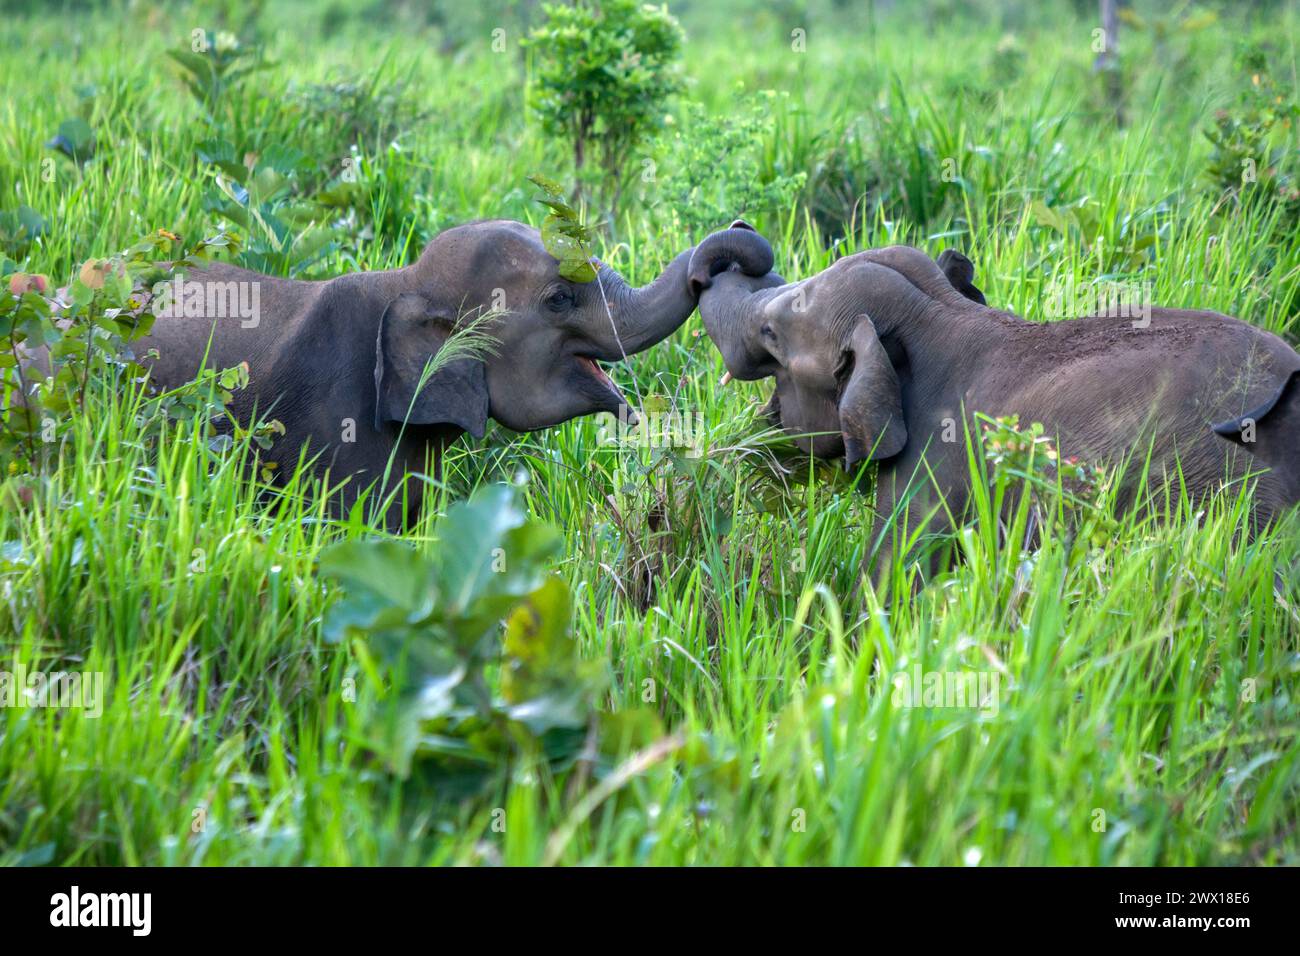 Wild elephants play in lush vegetation adjacent to the road near Habarana in central Sri Lanka. Stock Photo